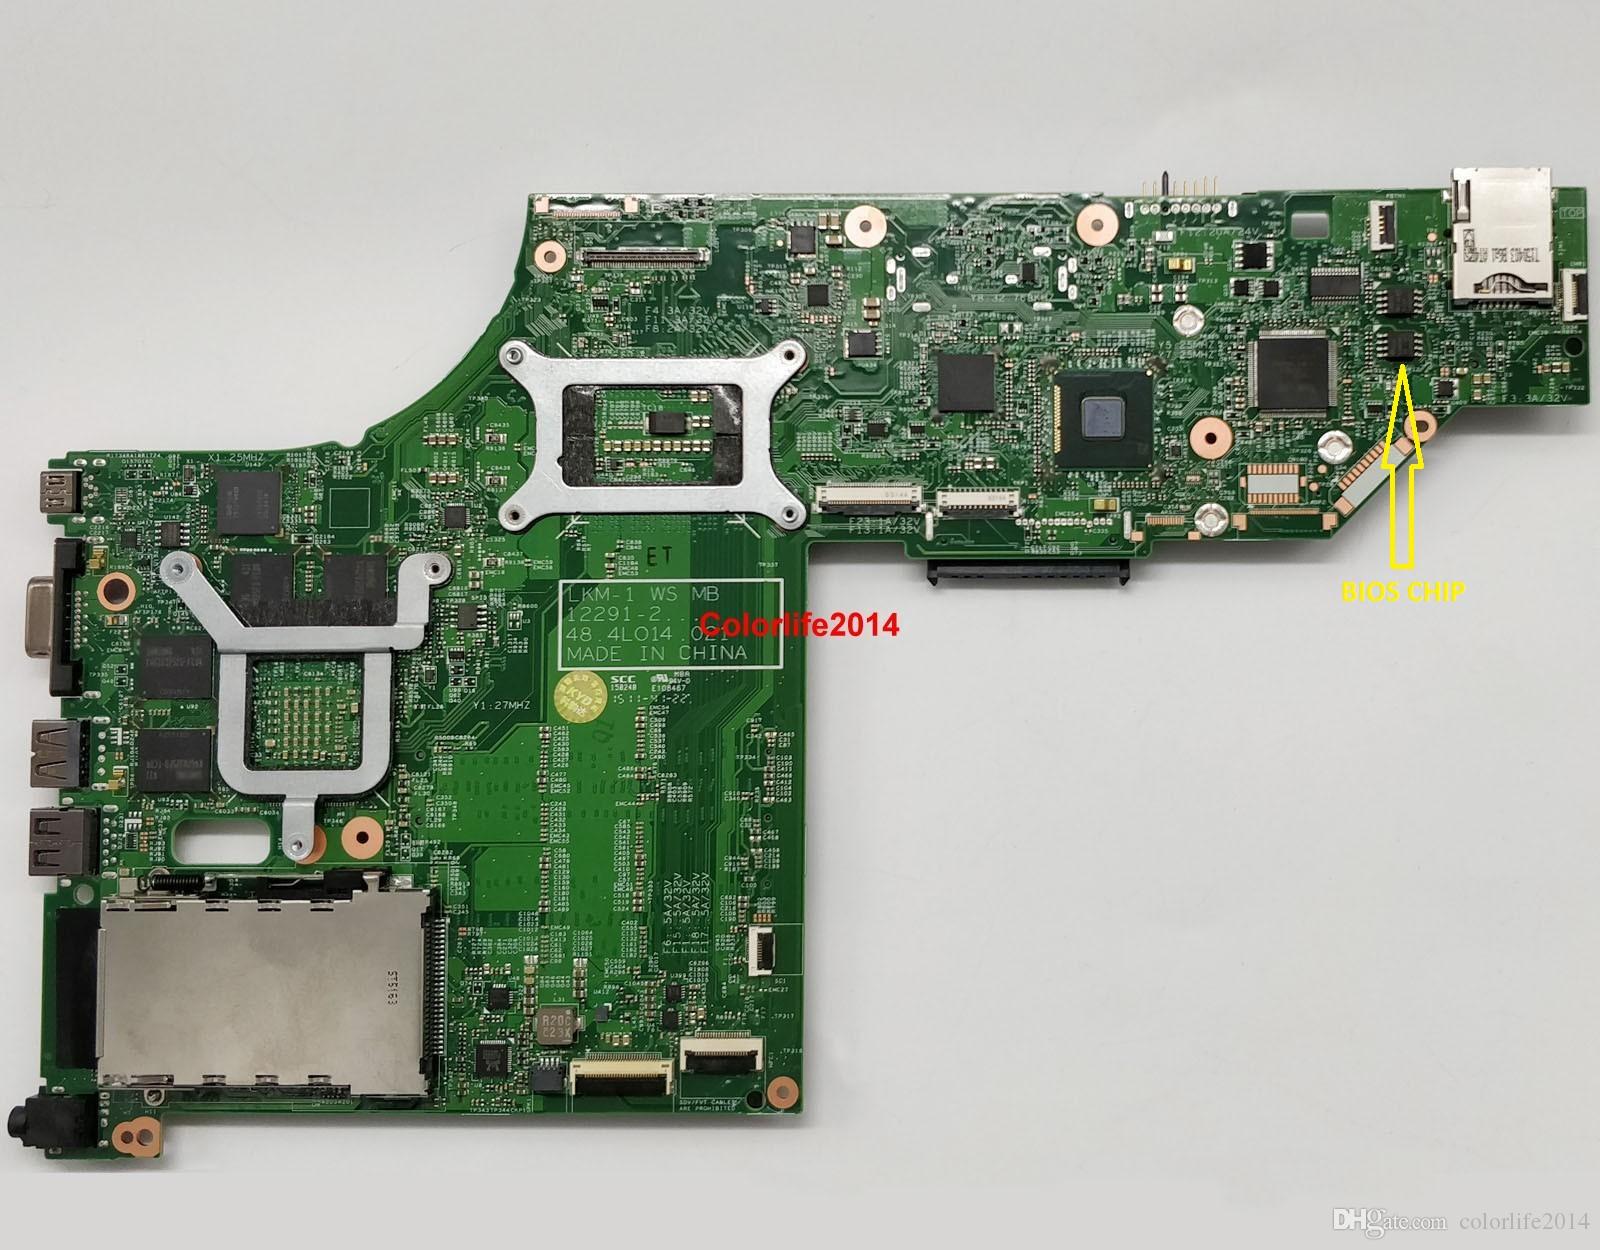 Write back the Original S/N and UUID Lenovo G580 - BIOS Modding